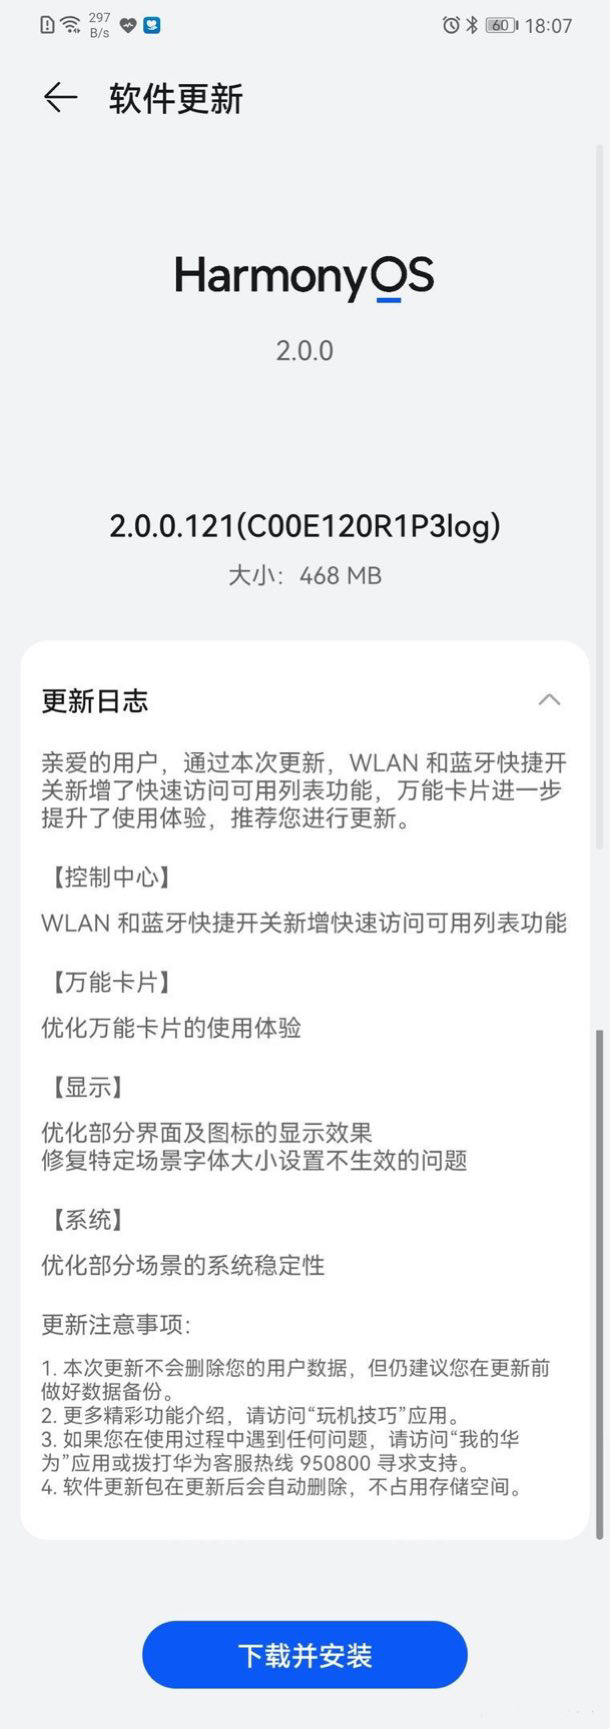 Huawei Mate 9 HarmonyOS 2.0.0.124